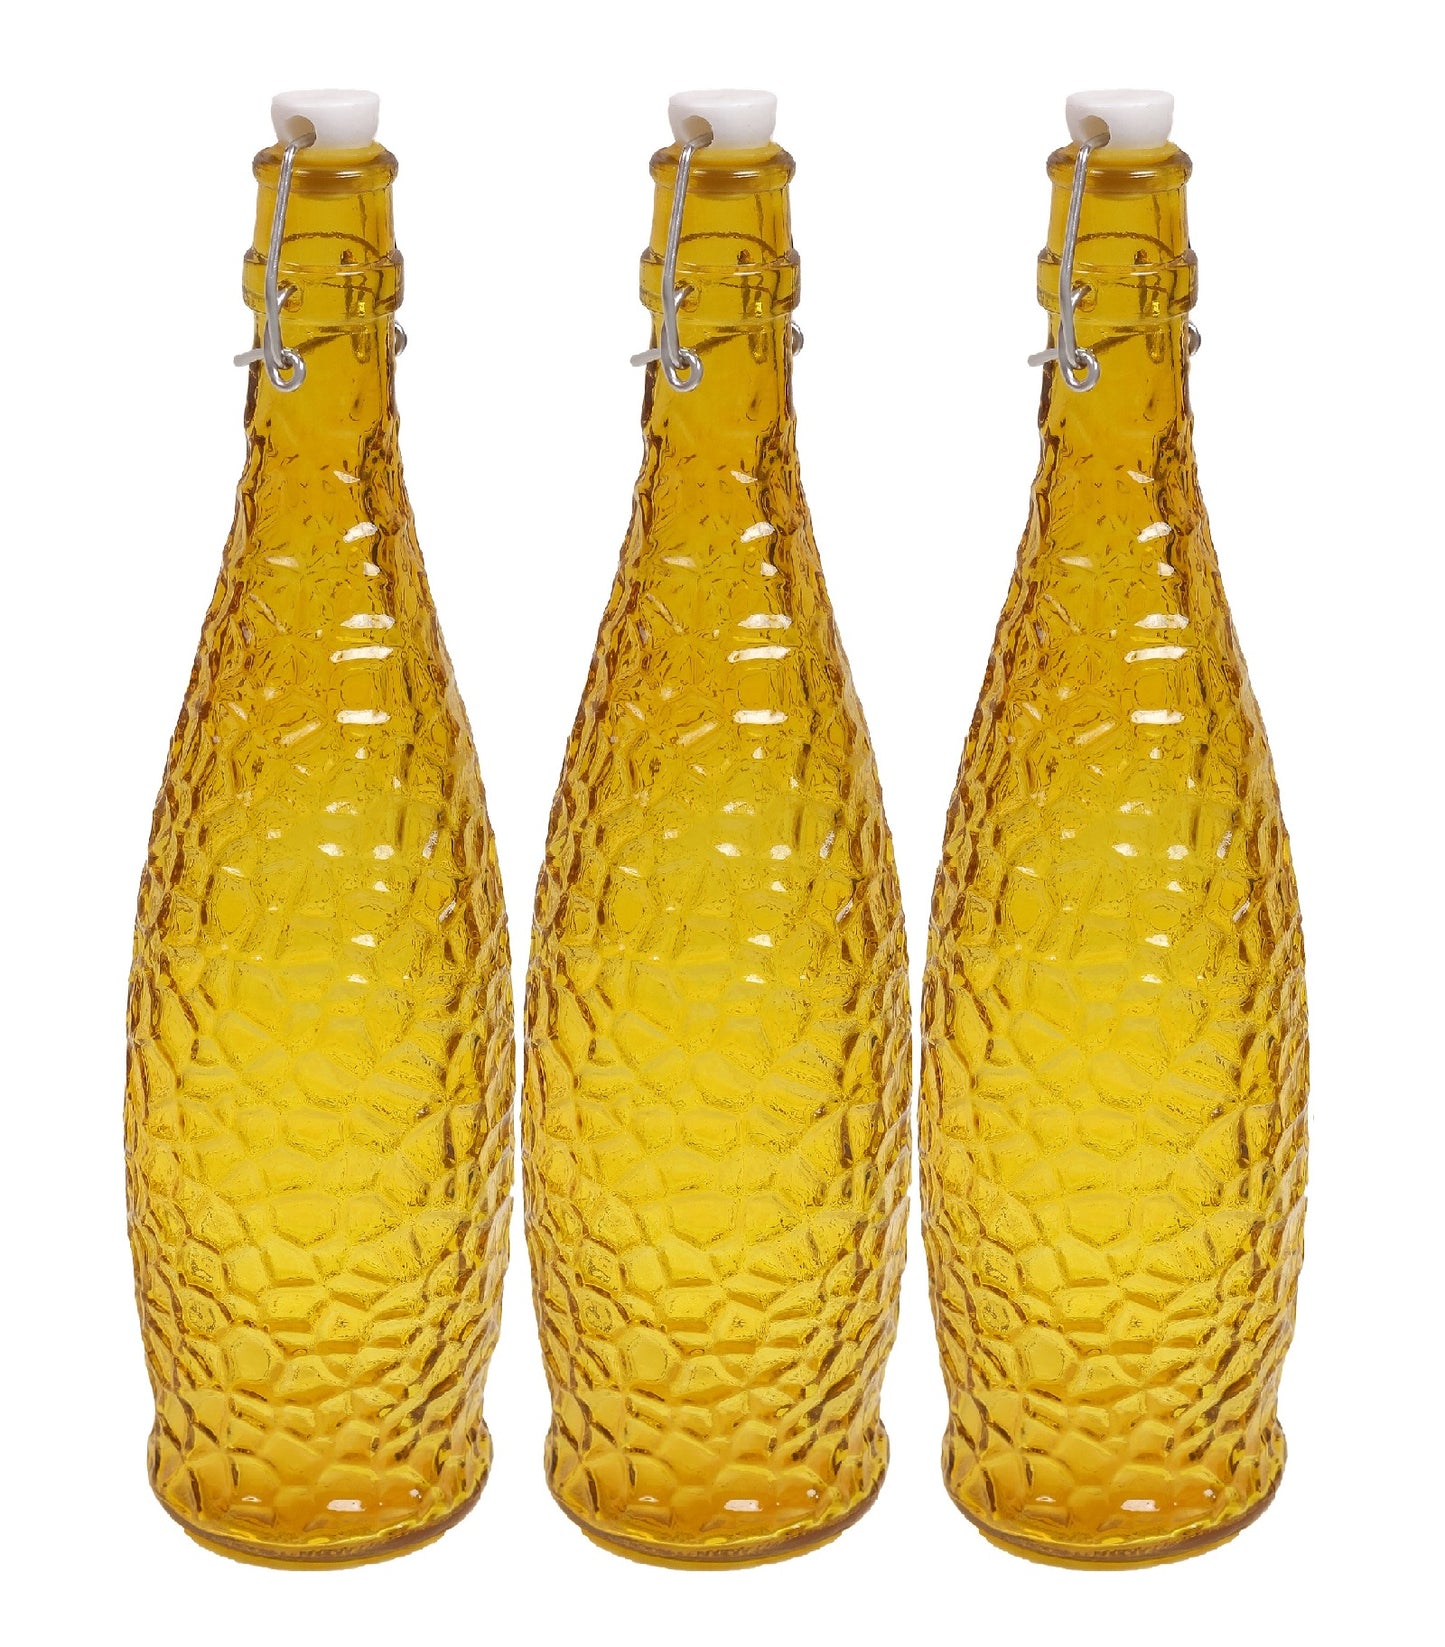 MACHAK Crick Glass Water Bottle For Fridge, 1 L, Multicolors